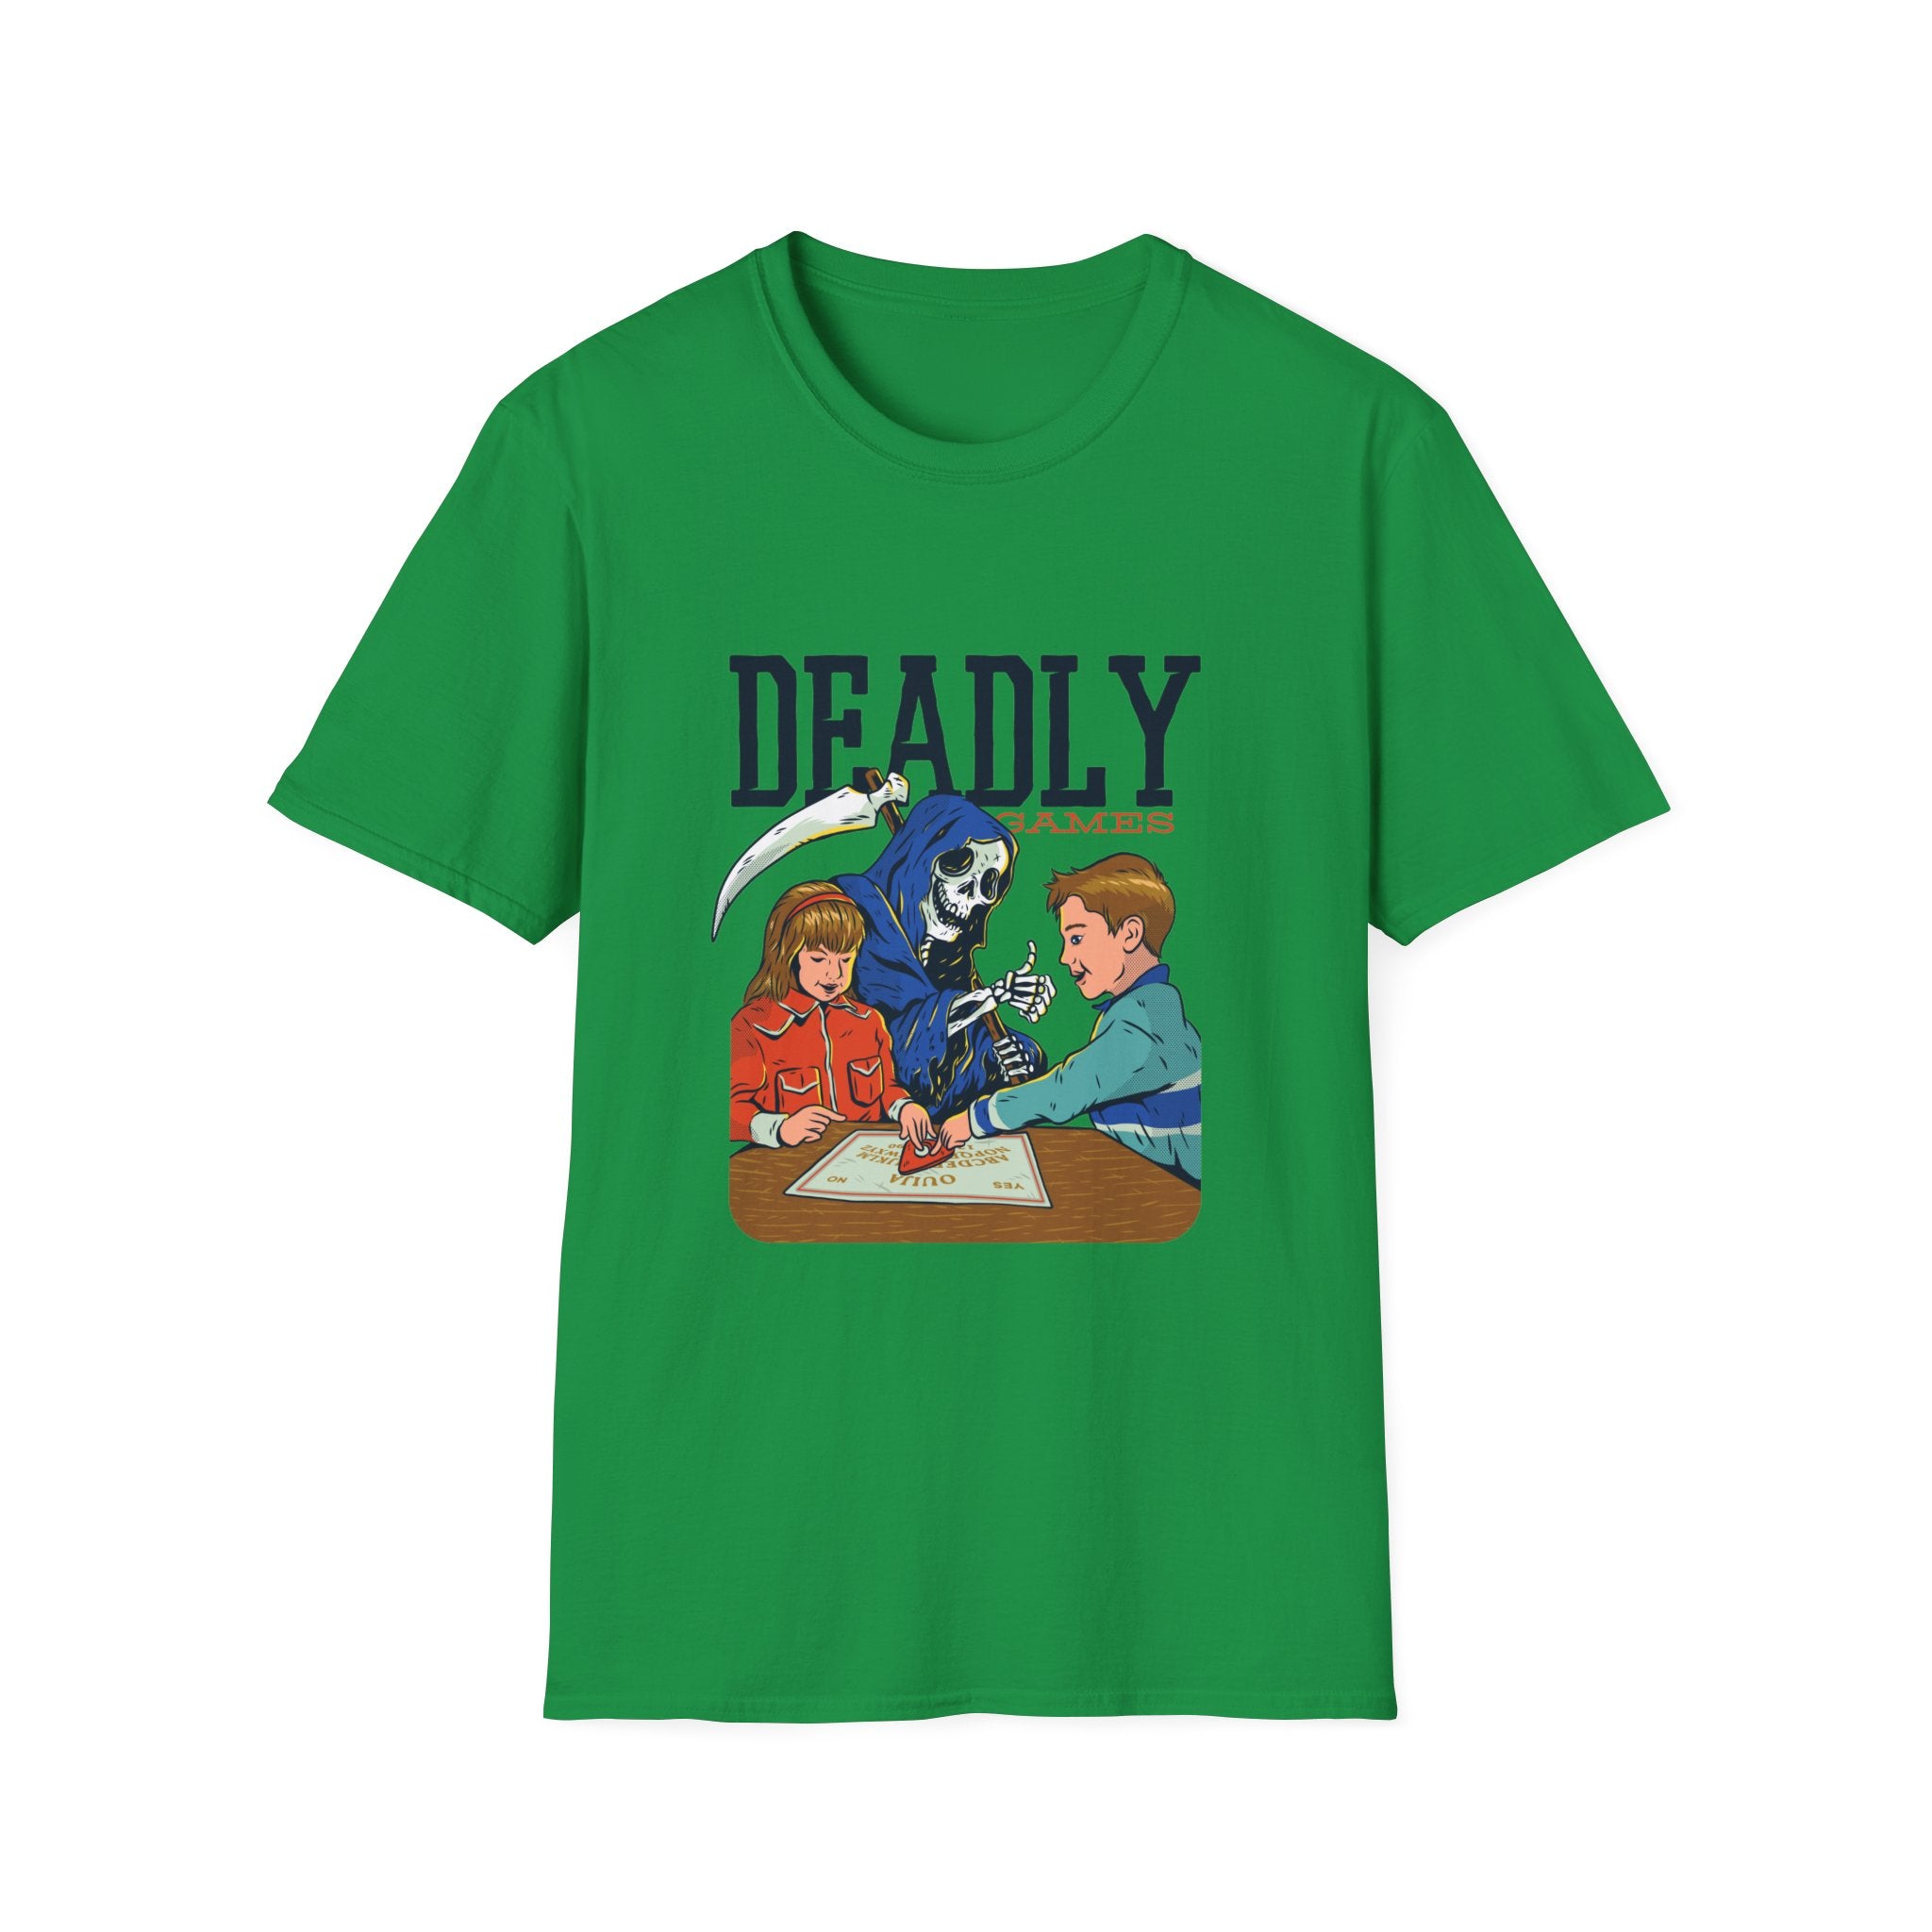 Deadly Games T-Shirt